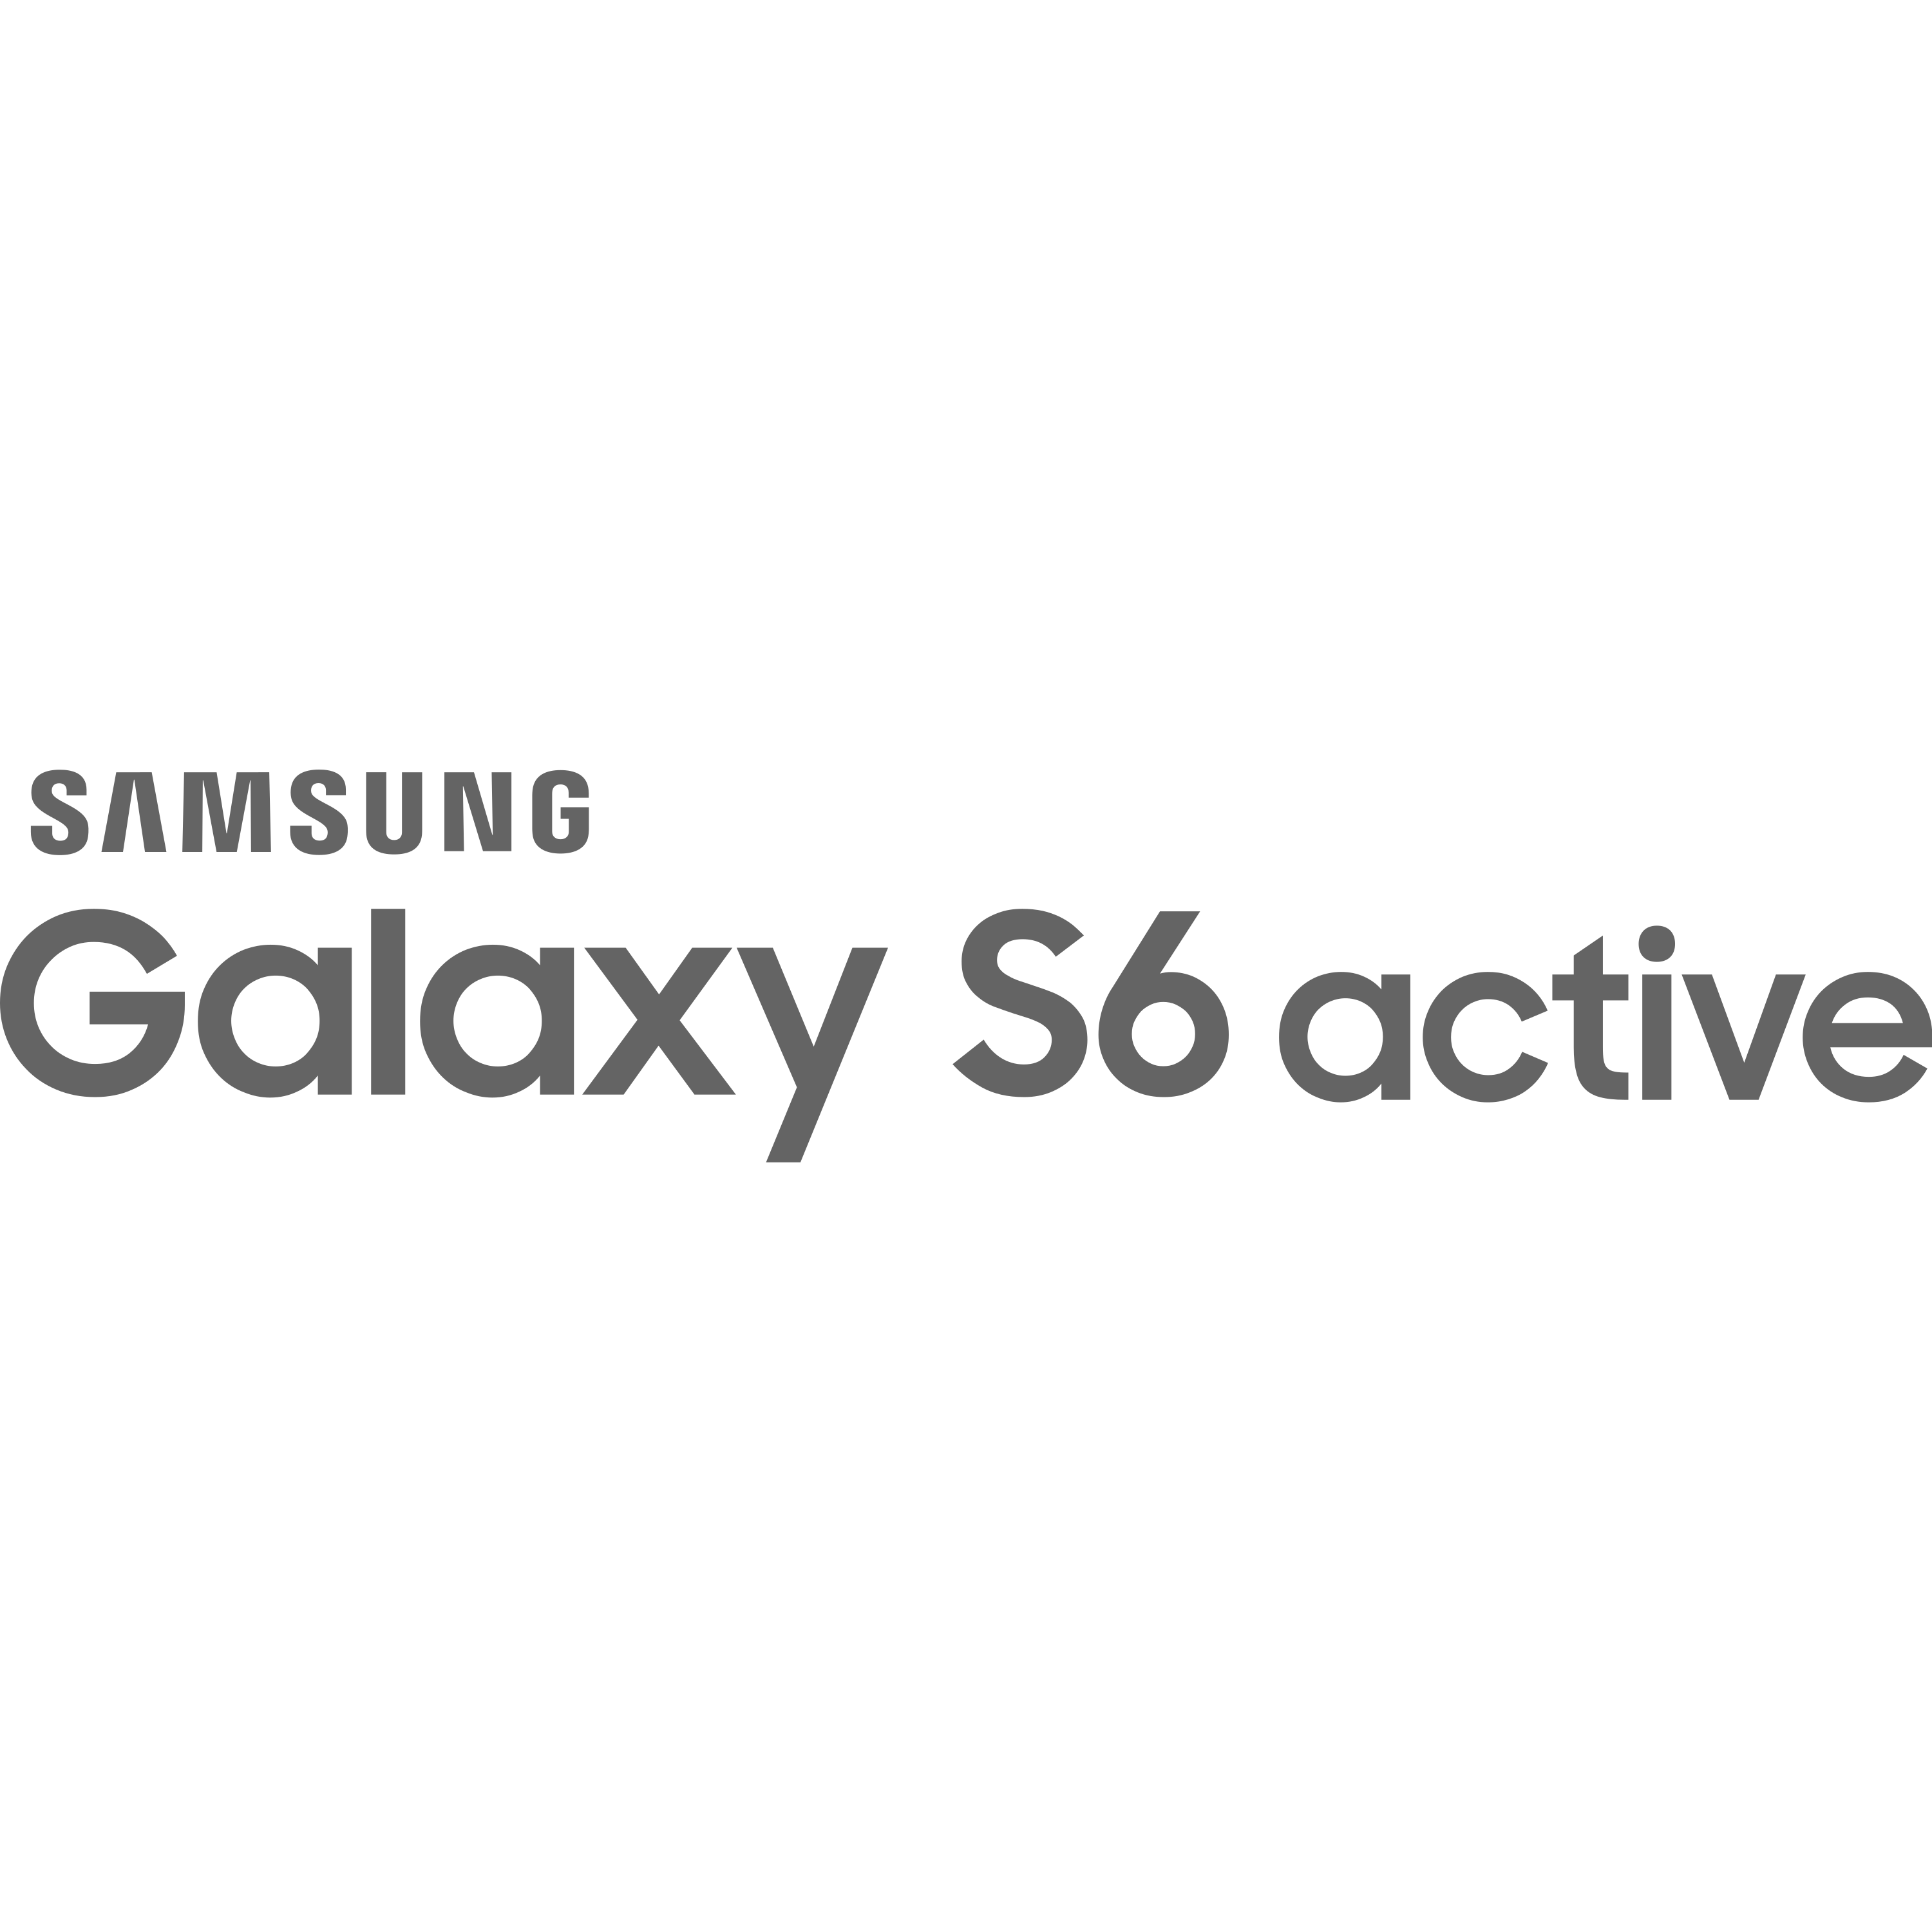 Samsung Galaxy S6 Active Logo Transparent Photo